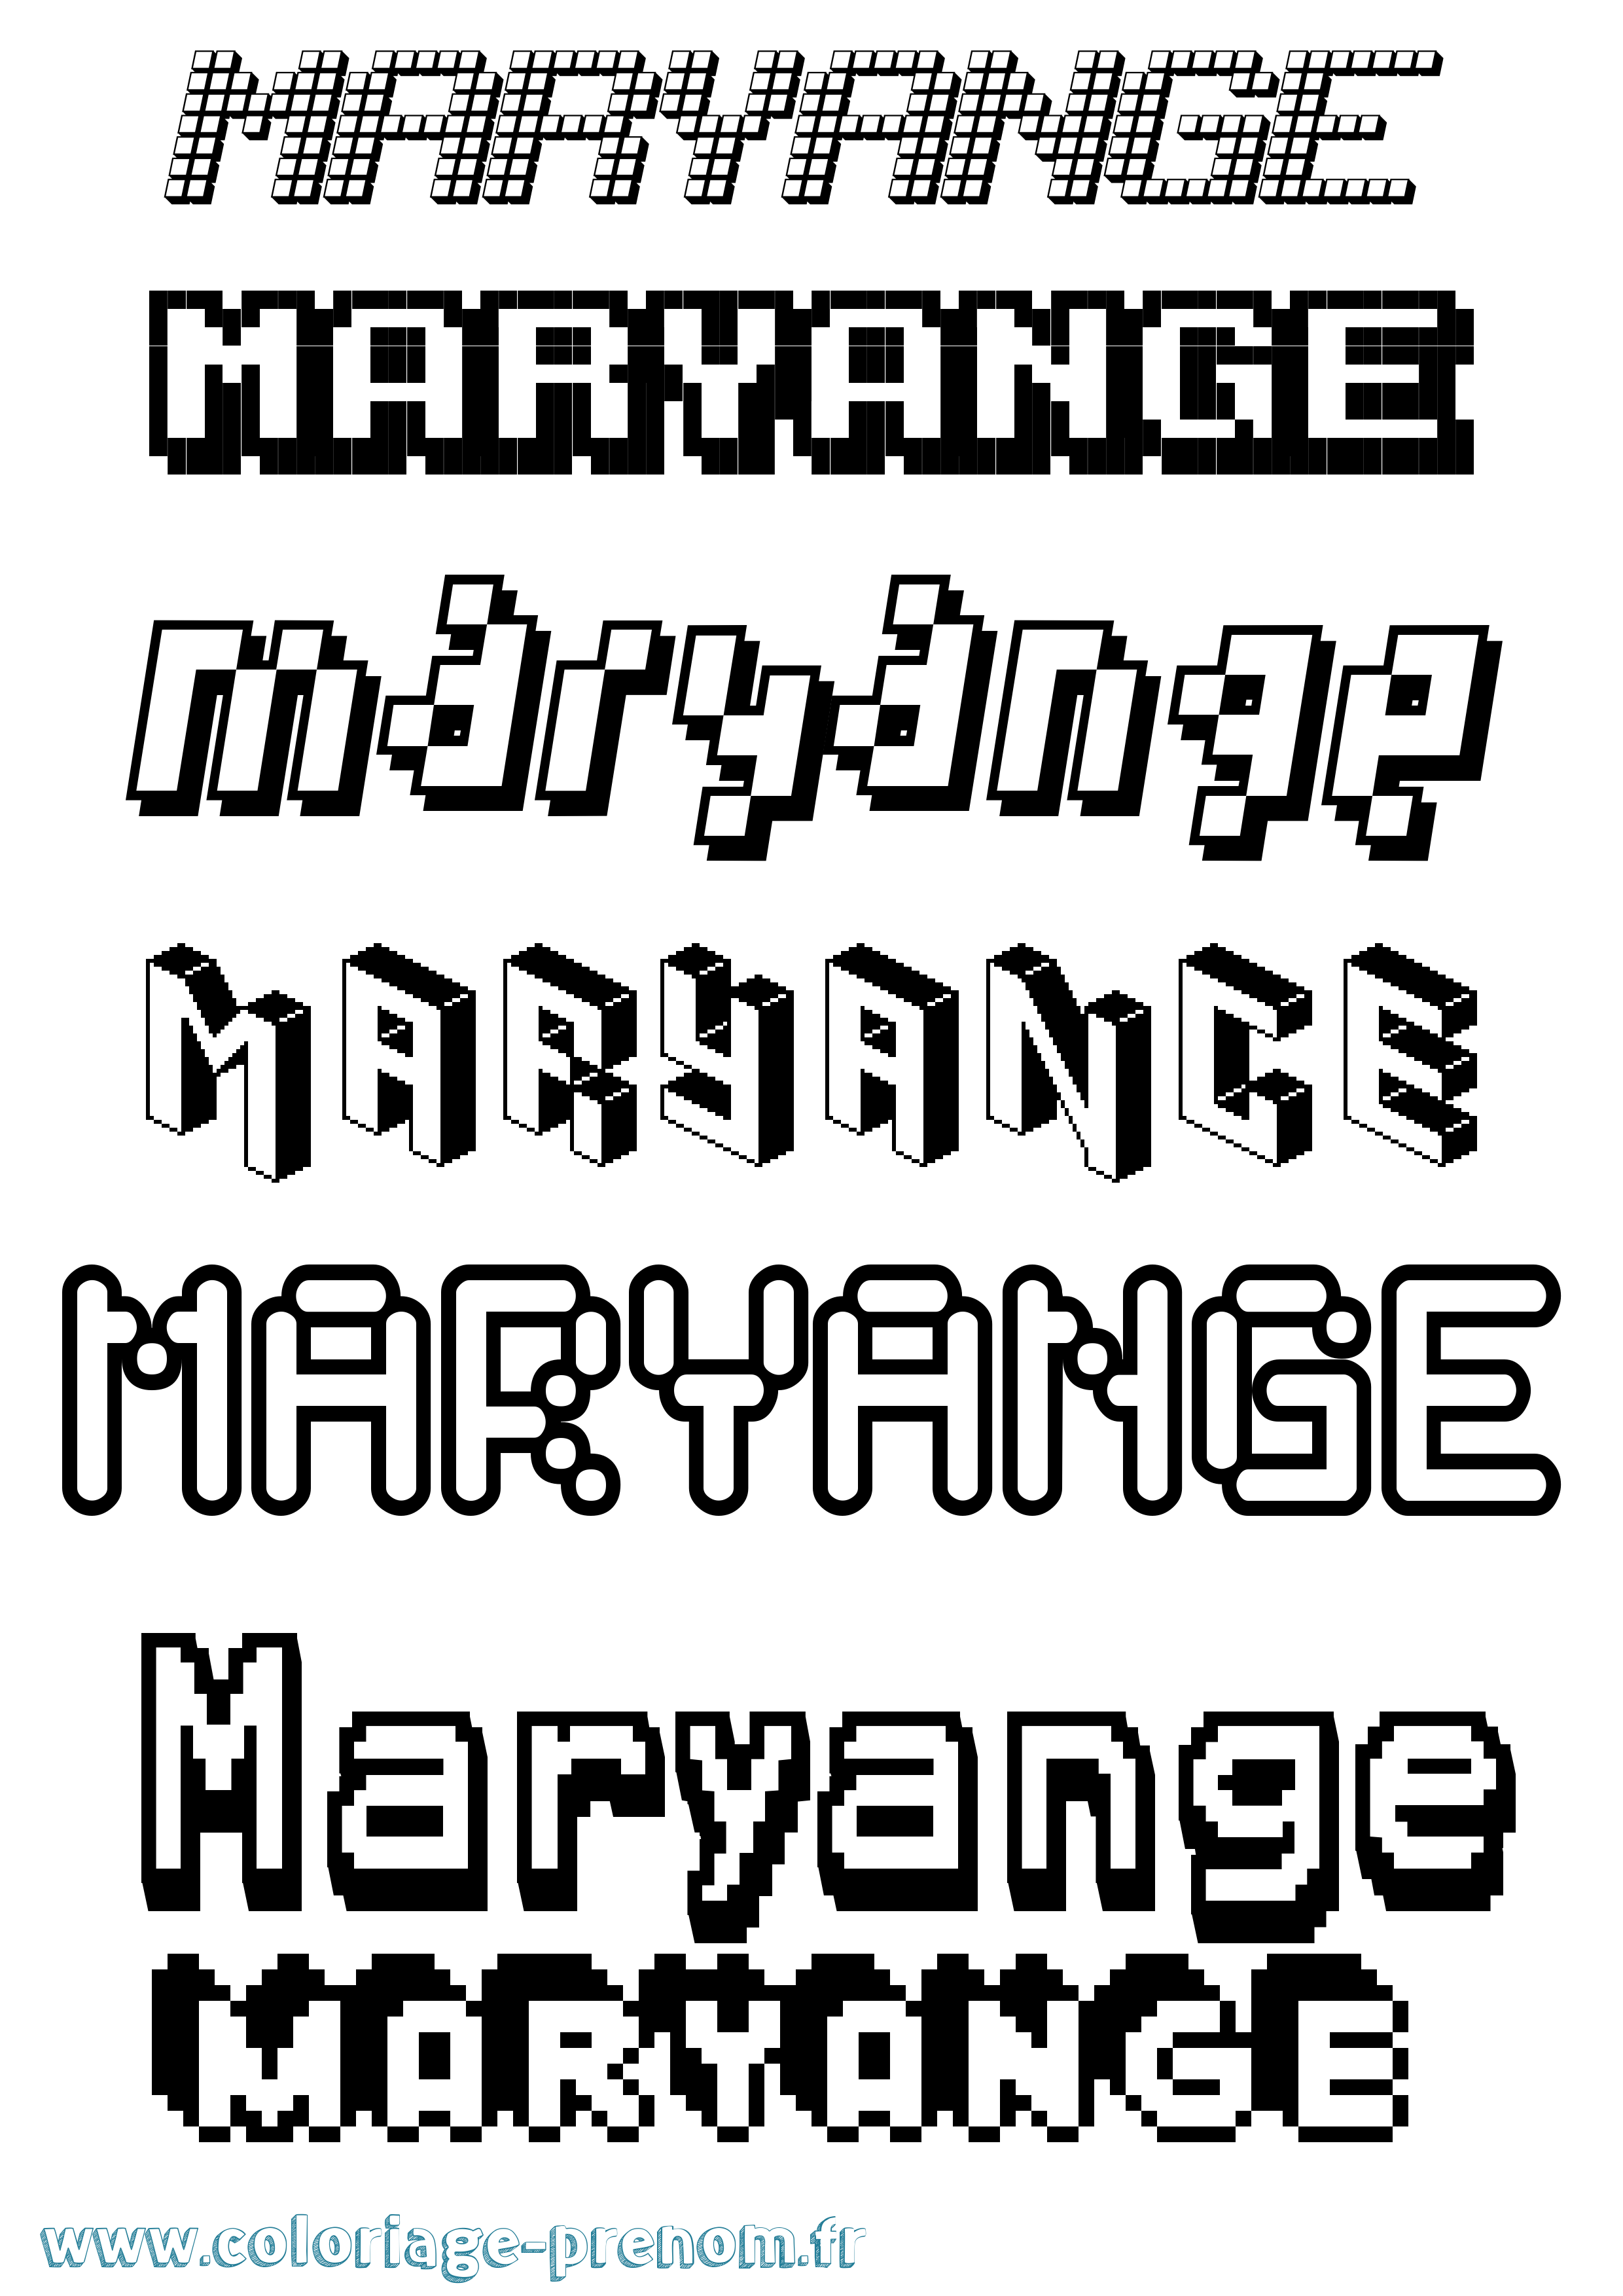 Coloriage prénom Maryange Pixel